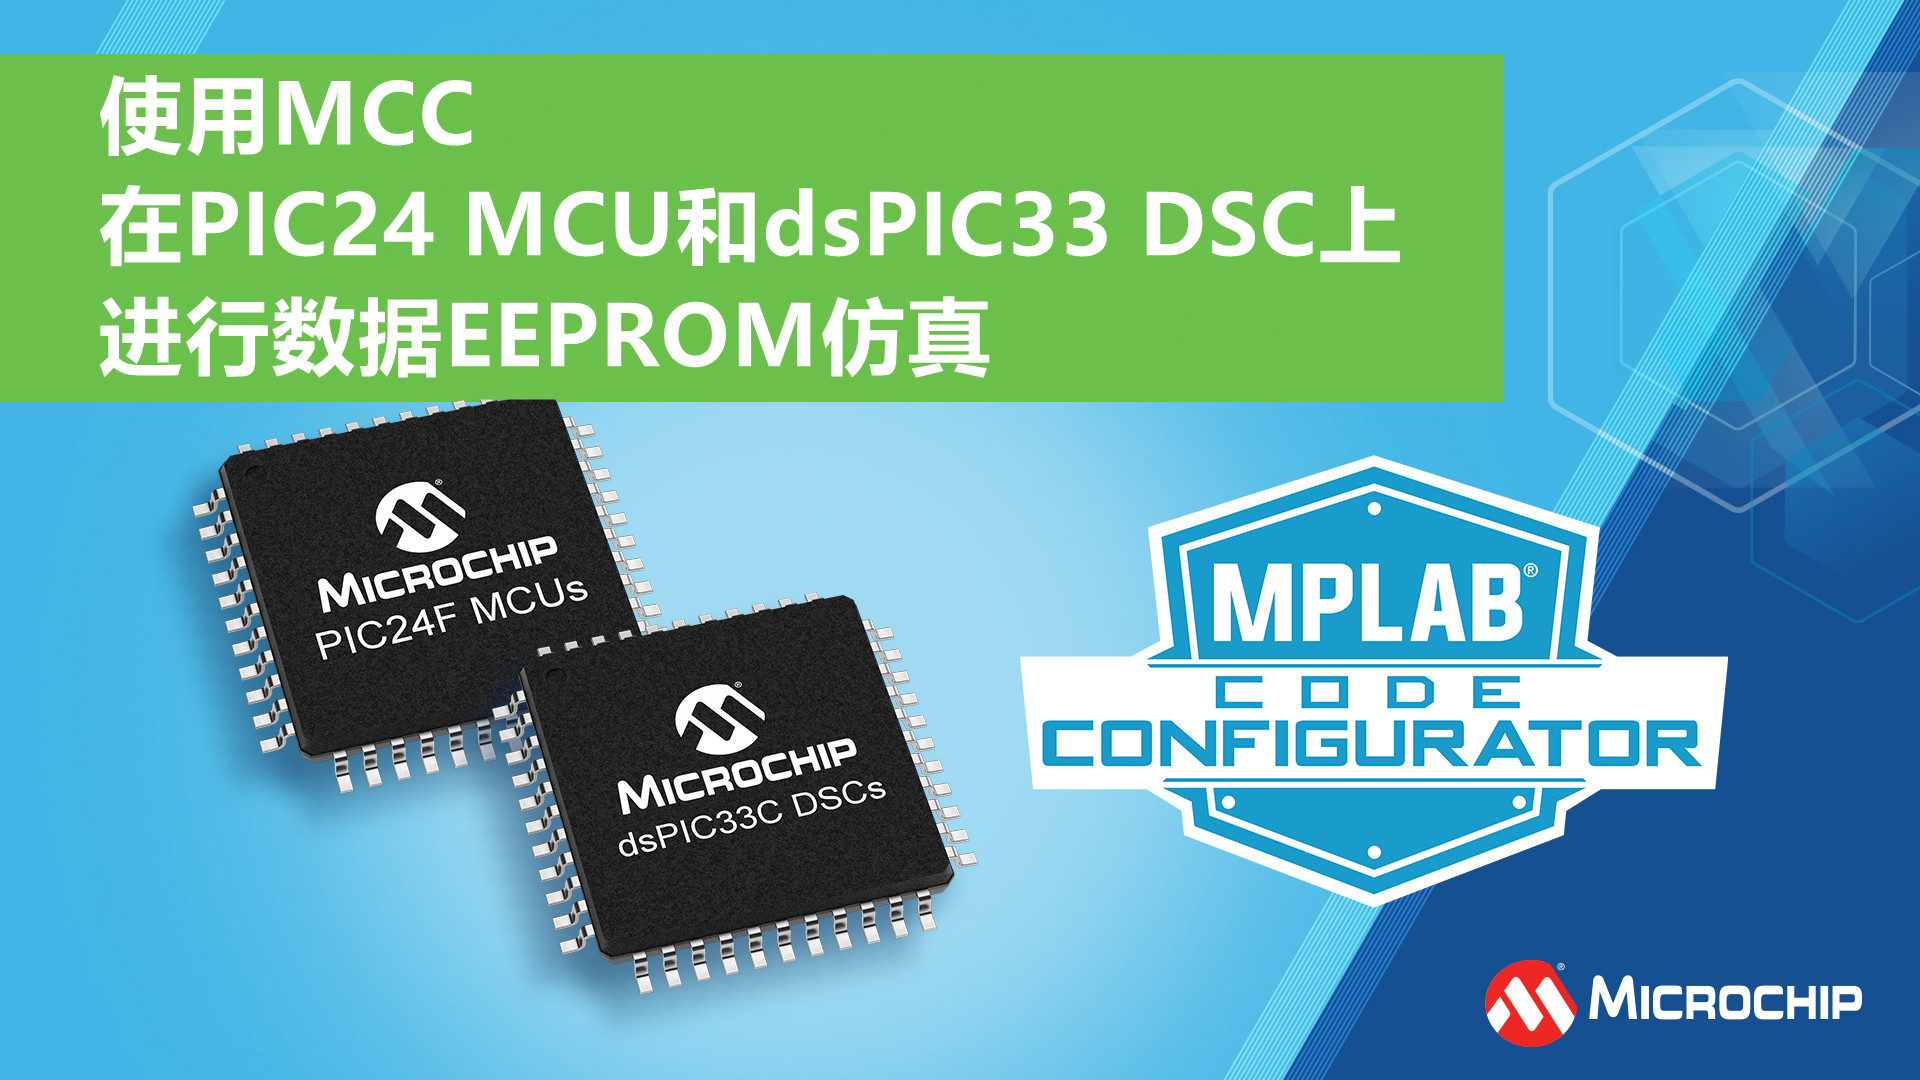 使用MCC在PIC24 MCU和dsPIC33 DSC上进行数据EEPROM仿真